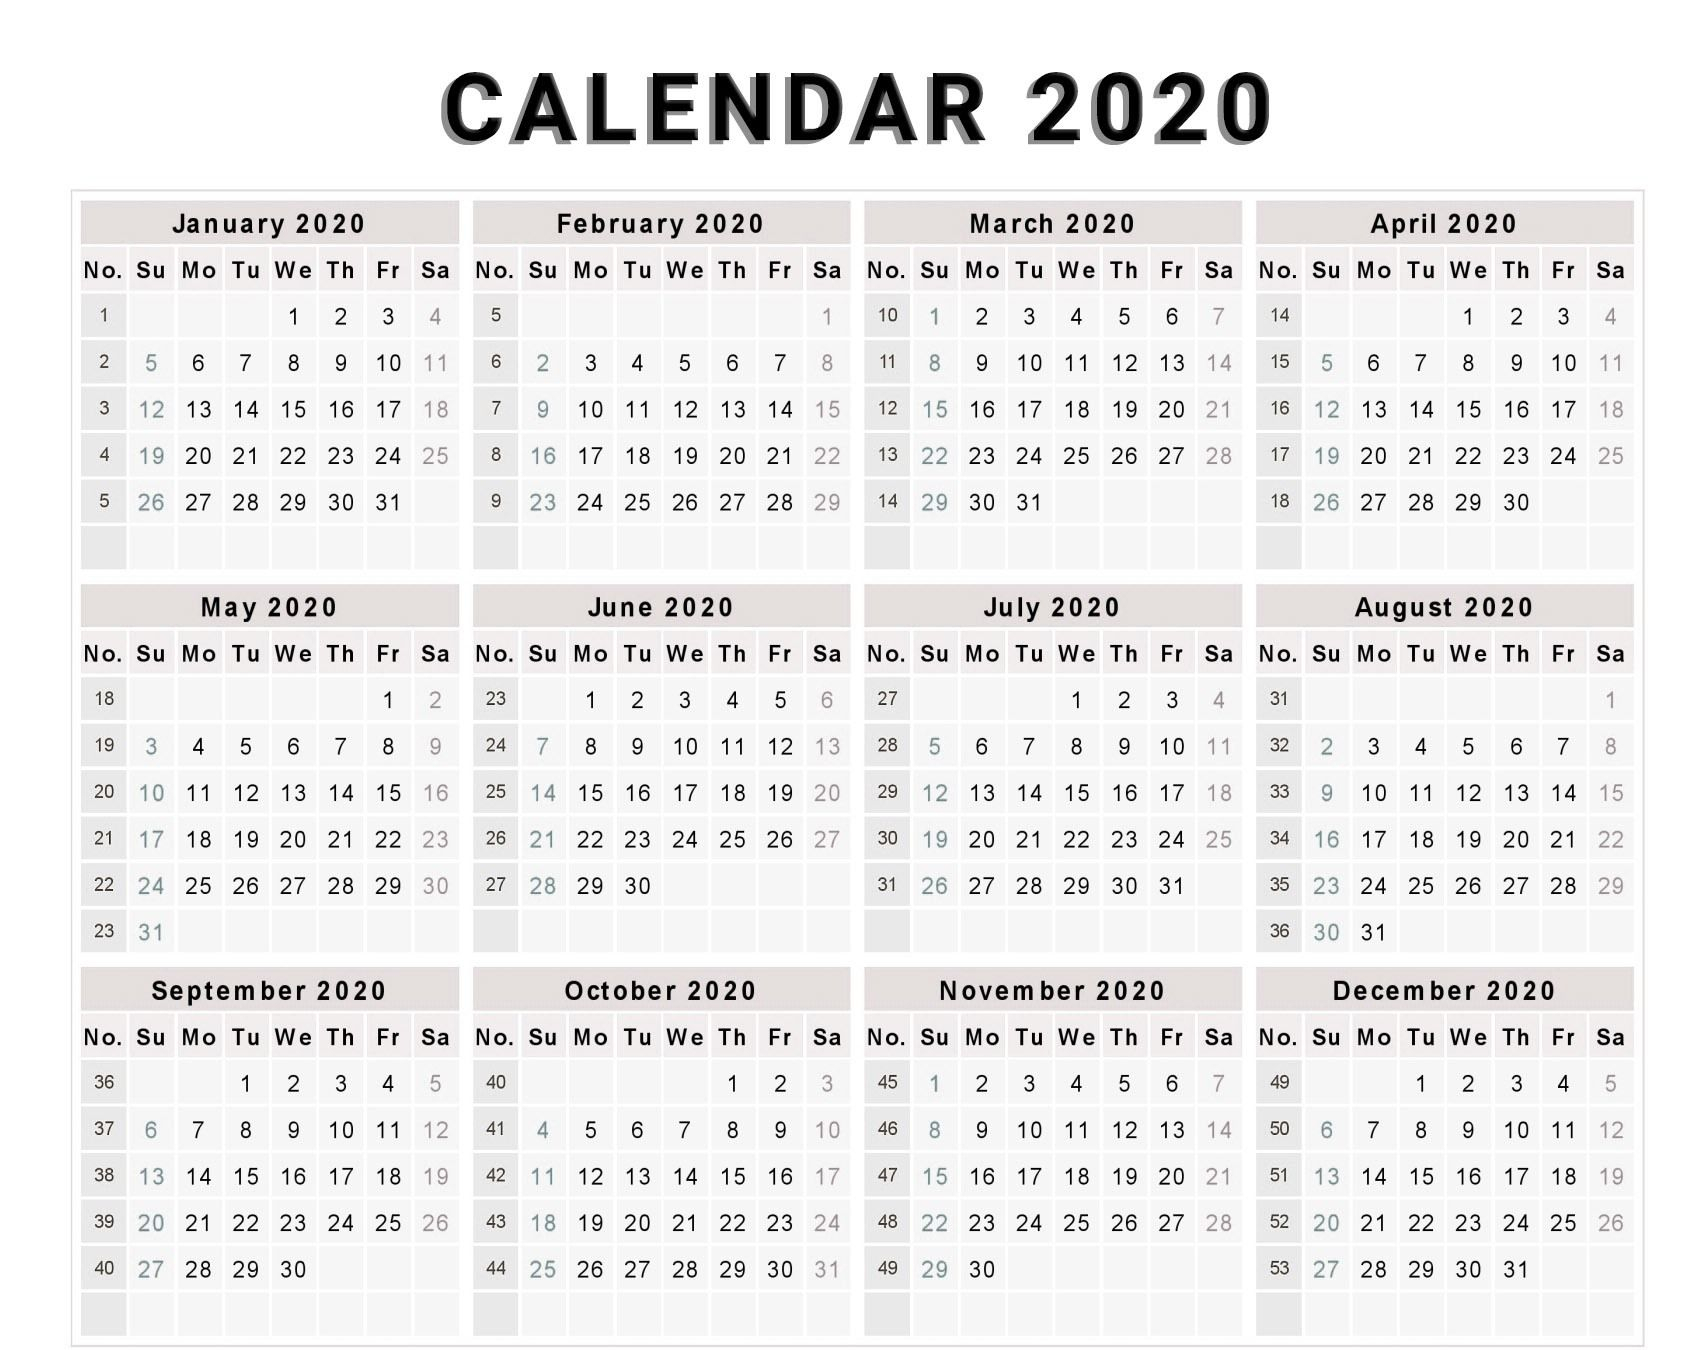 Calendar 2020 Free Template With Weeks | Free Calendar